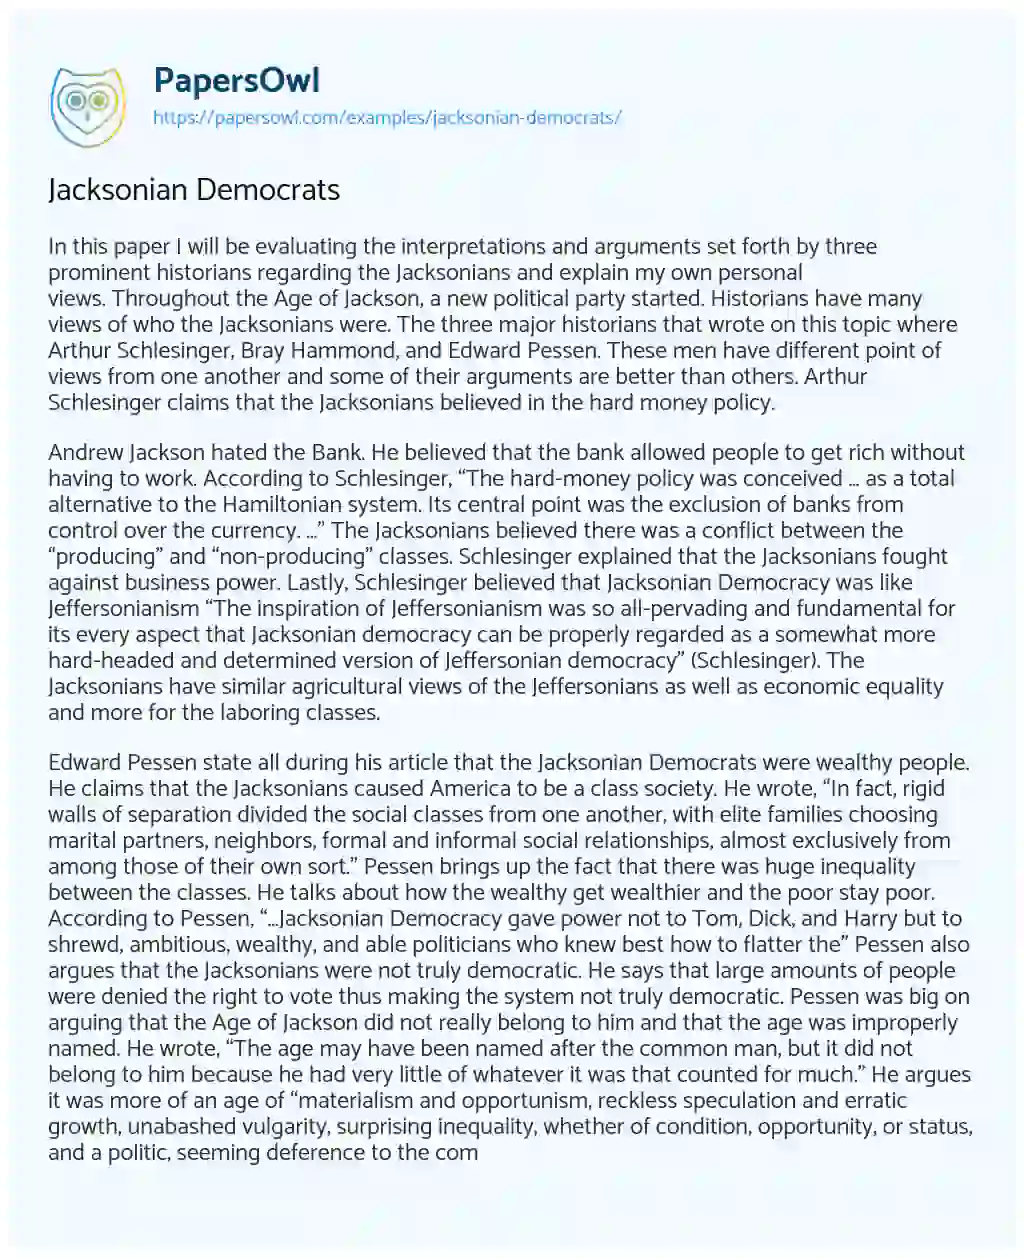 Essay on Jacksonian Democrats